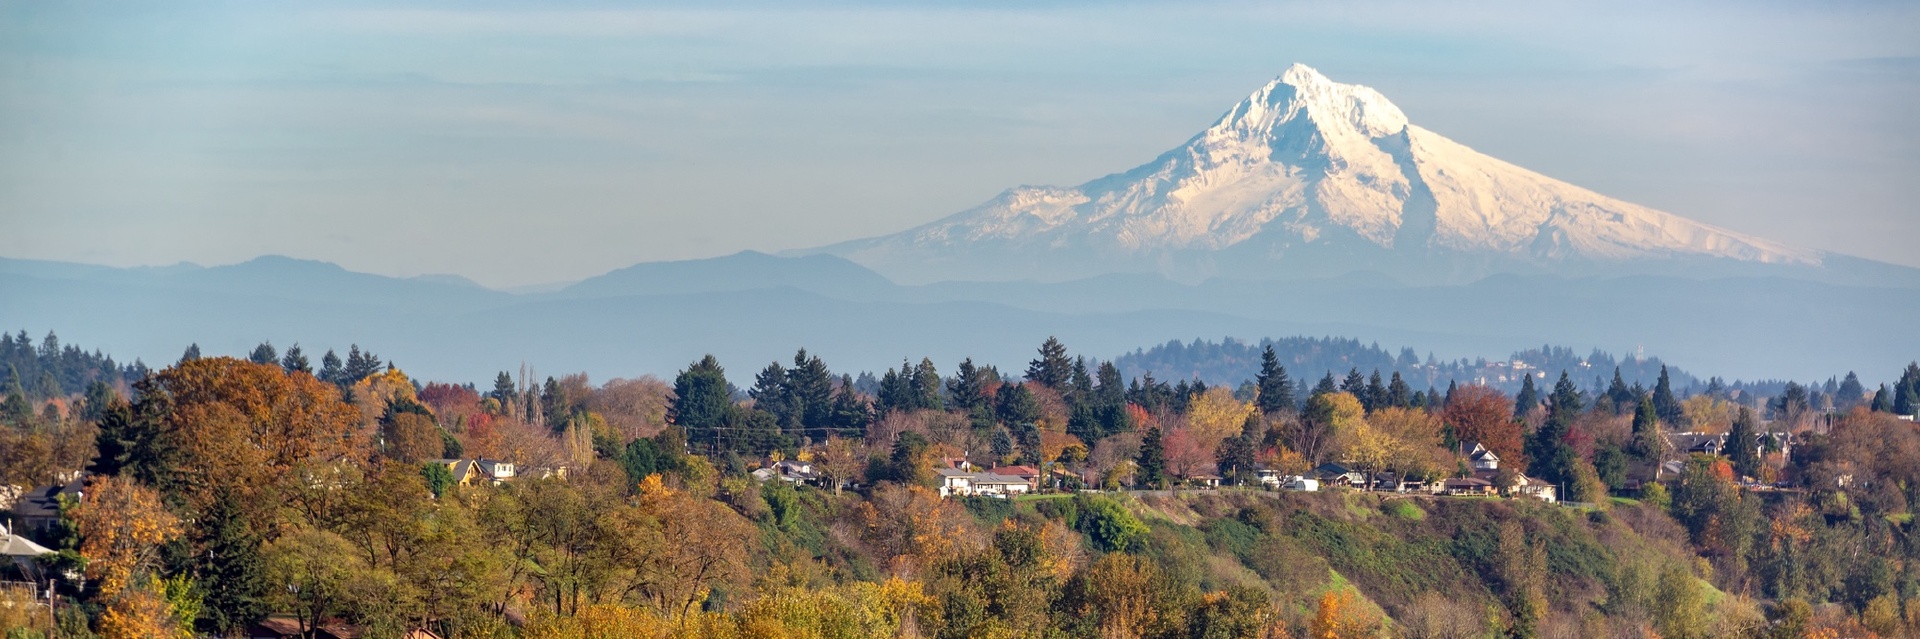 Oregon: Portland's Roses, Rivers and Rail Trails - Bike Tour